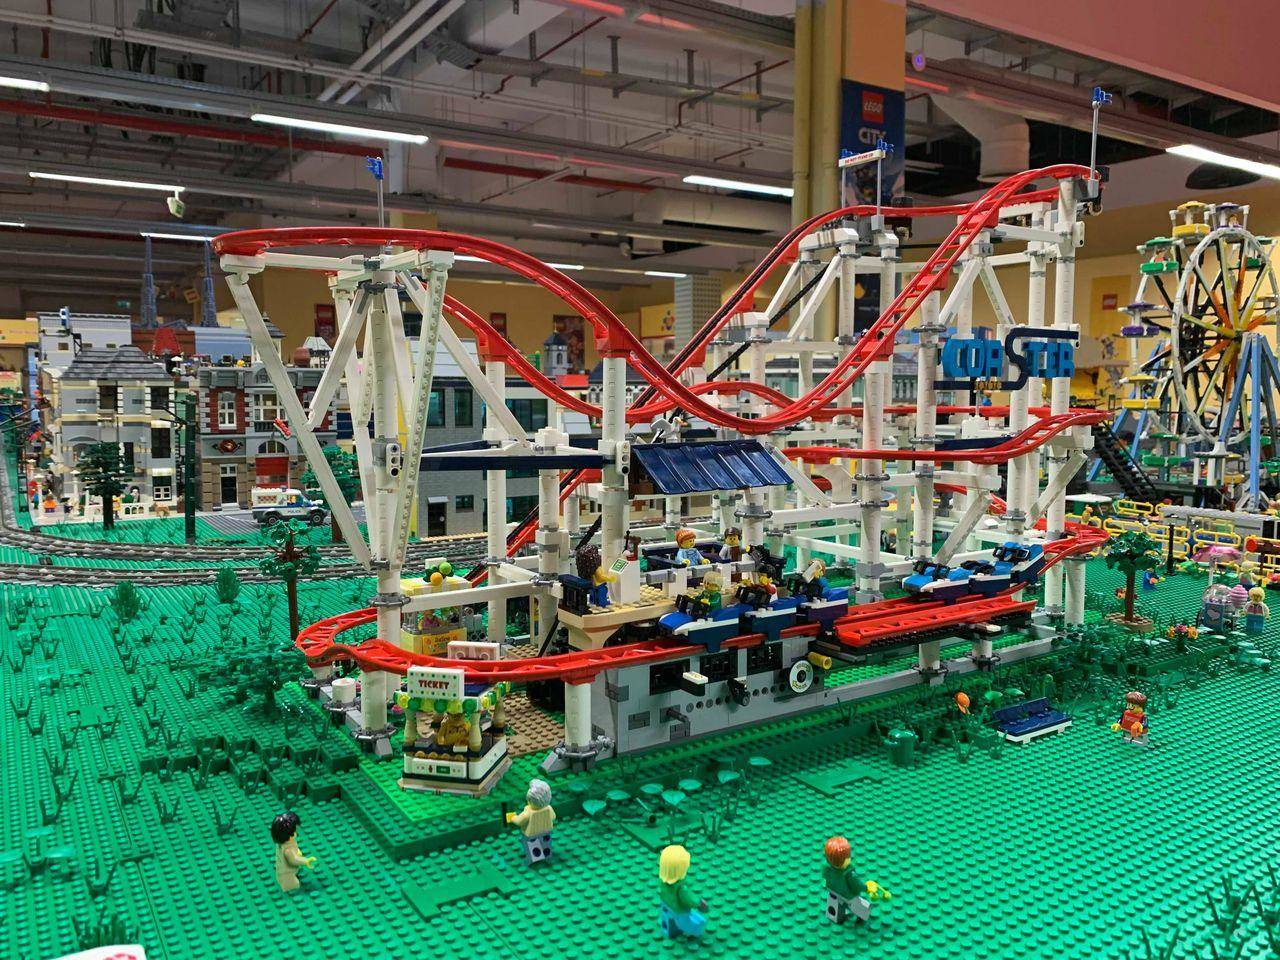 LEGO amusement park roller-coaster